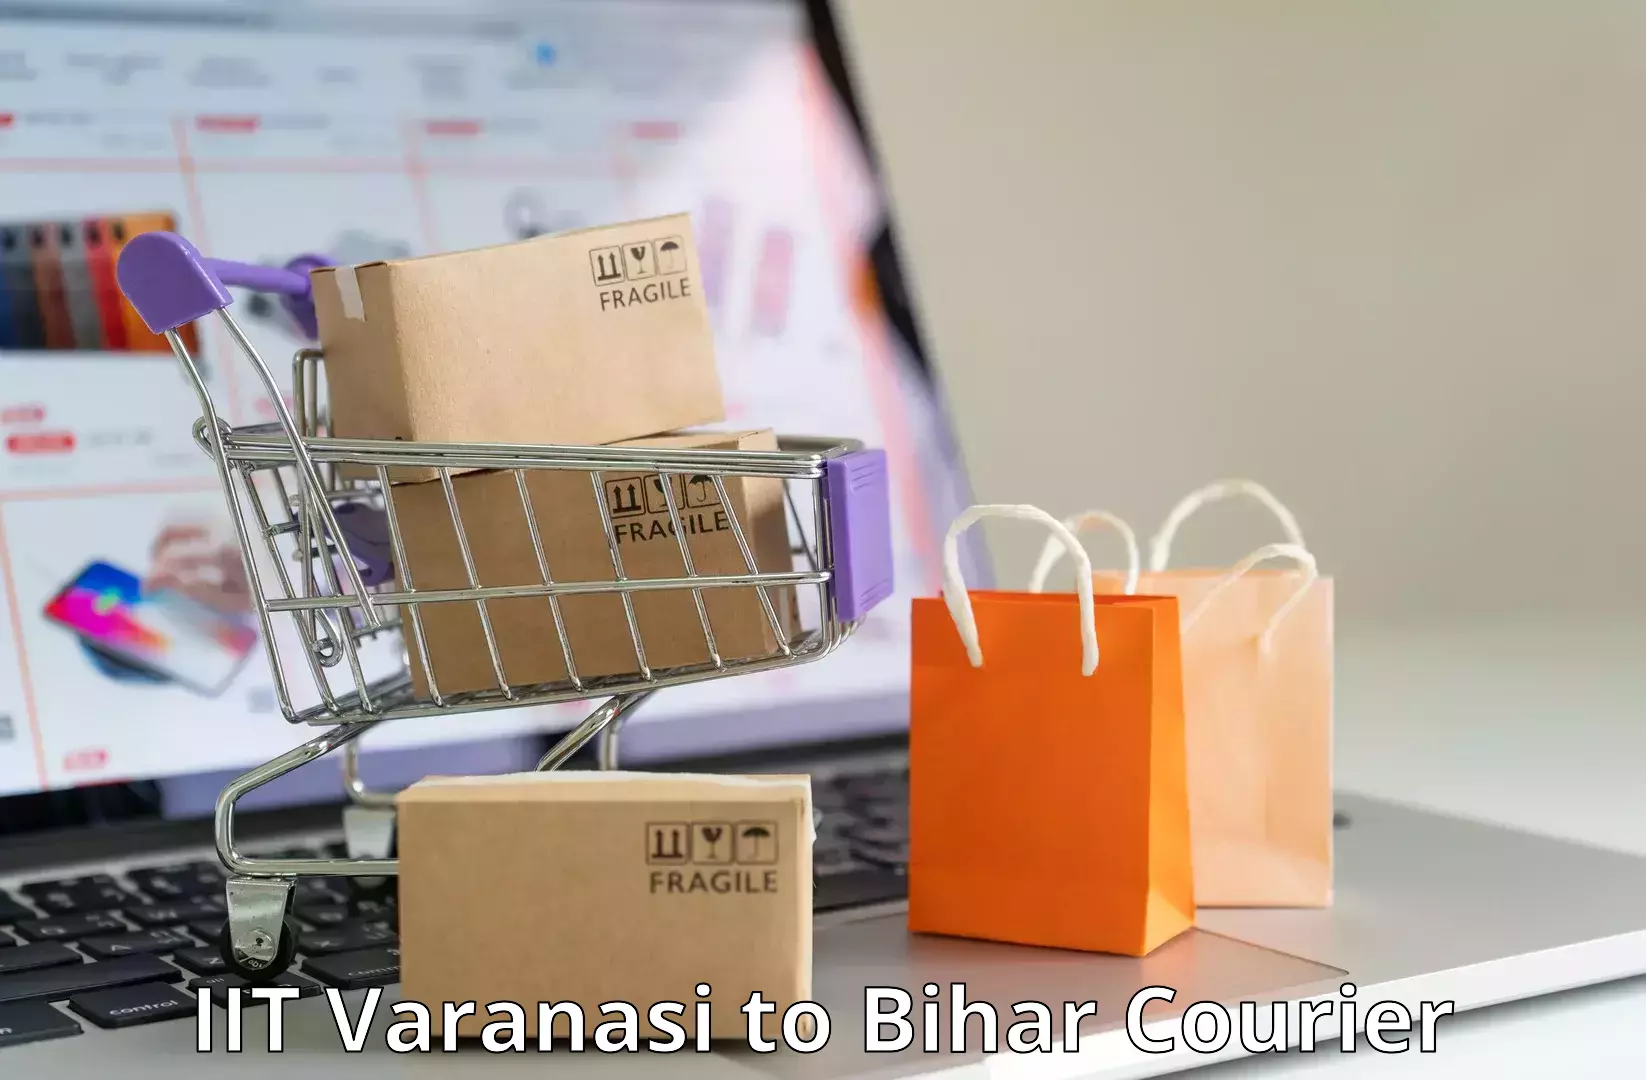 Courier service innovation IIT Varanasi to Mirganj